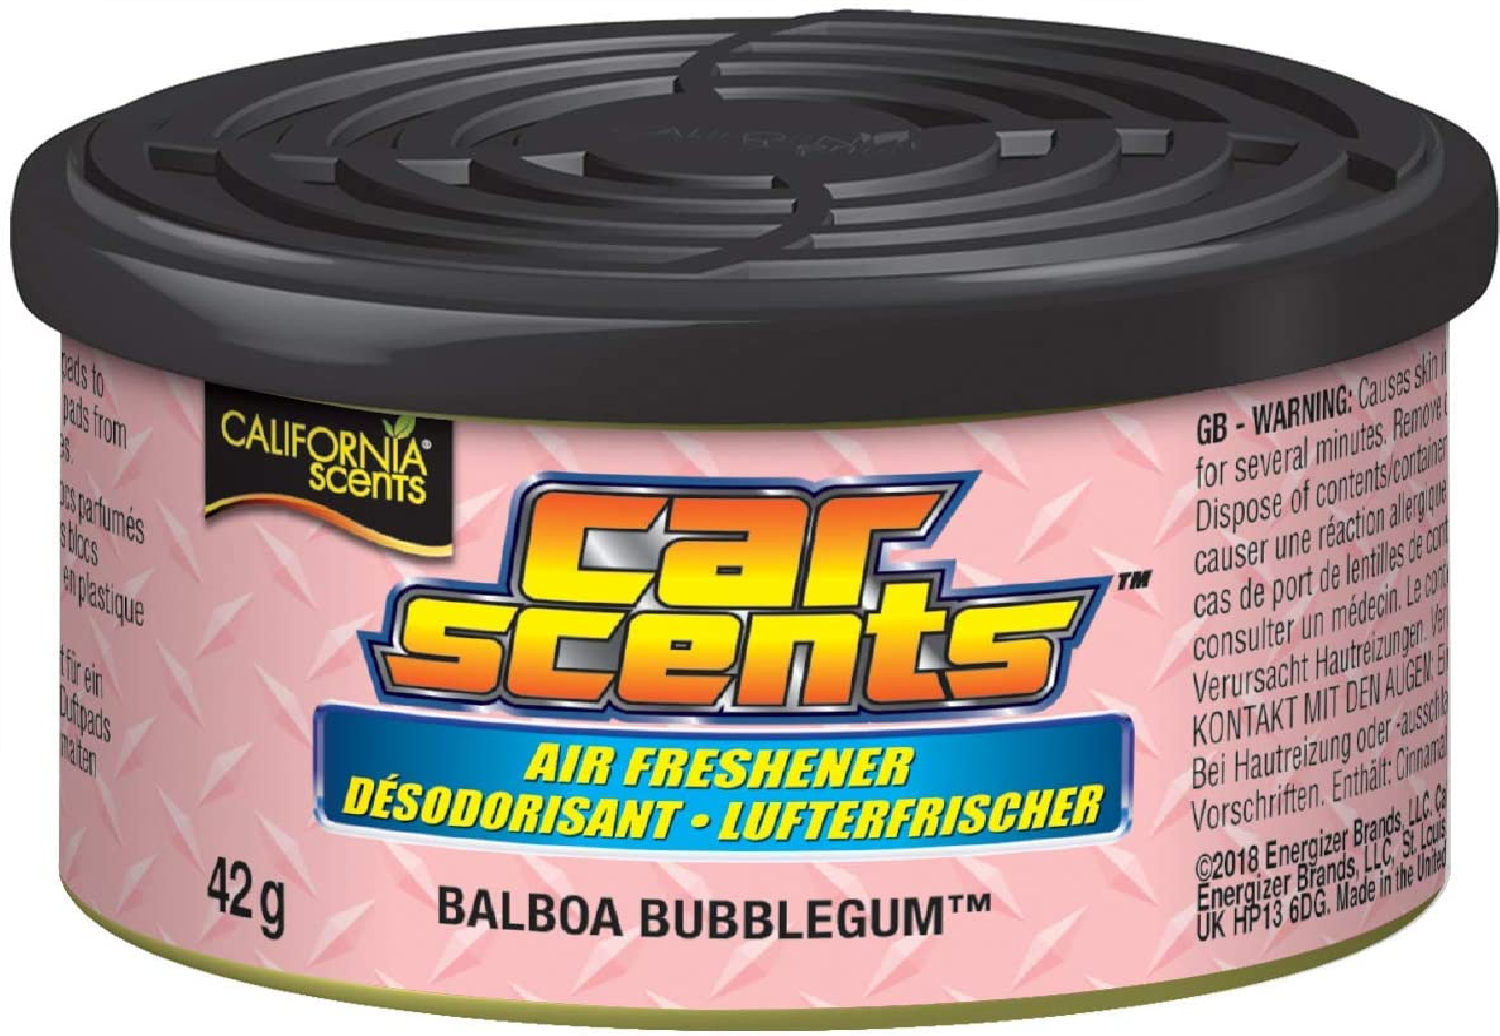 - Balboa Bubble Gum - Dose 42gr Balboa Bubble Gum - Dose 42gr